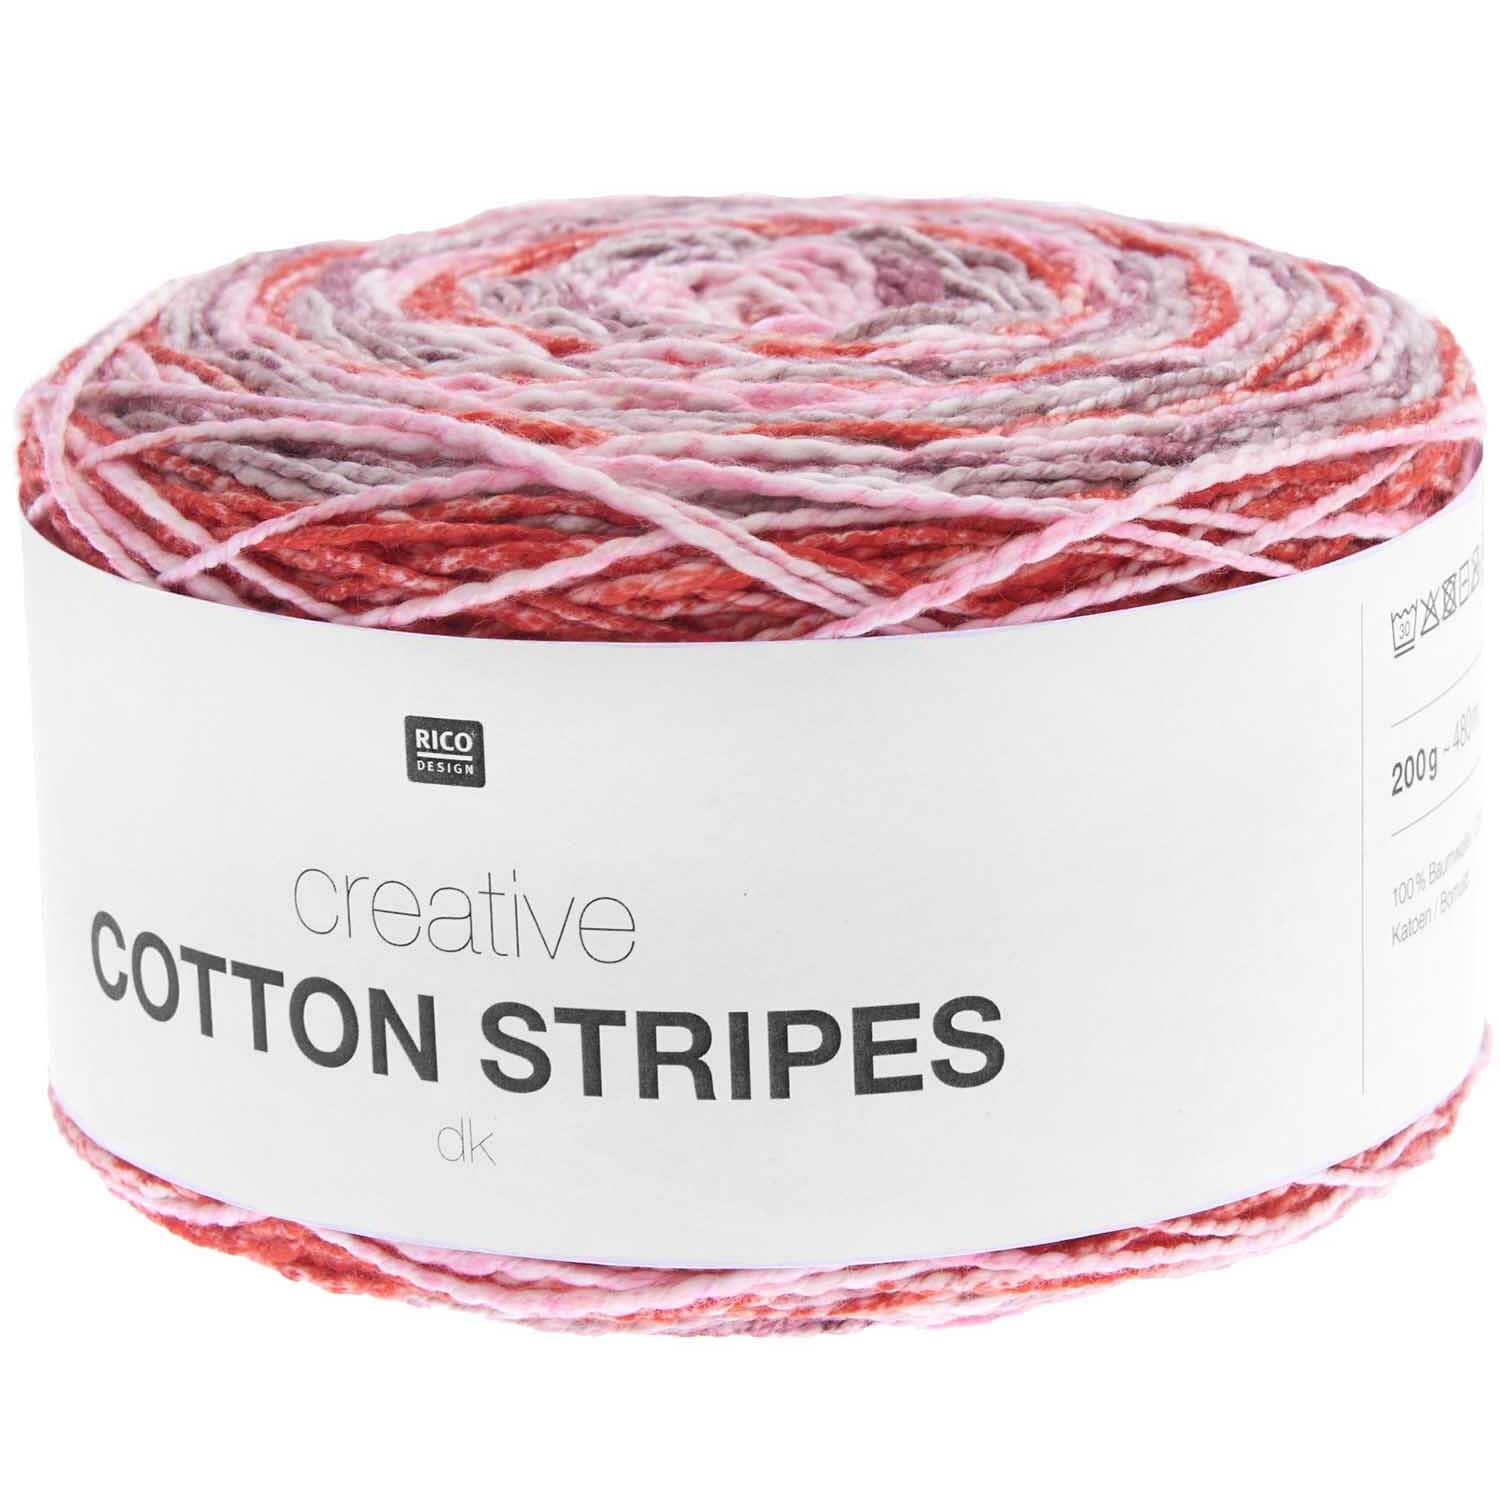 Creative Cotton Stripes dk